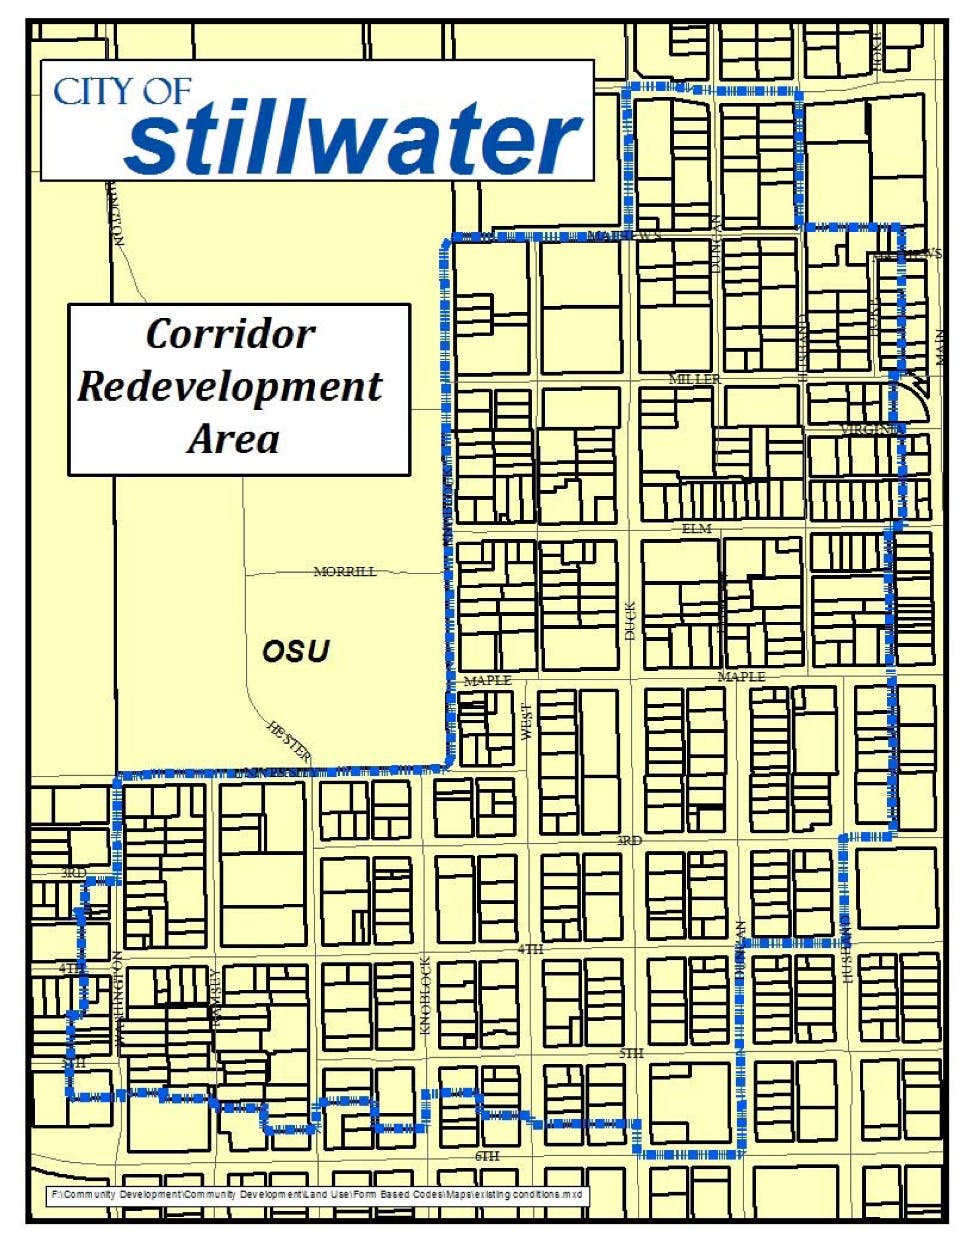 Corridor Redevelopment Area Map